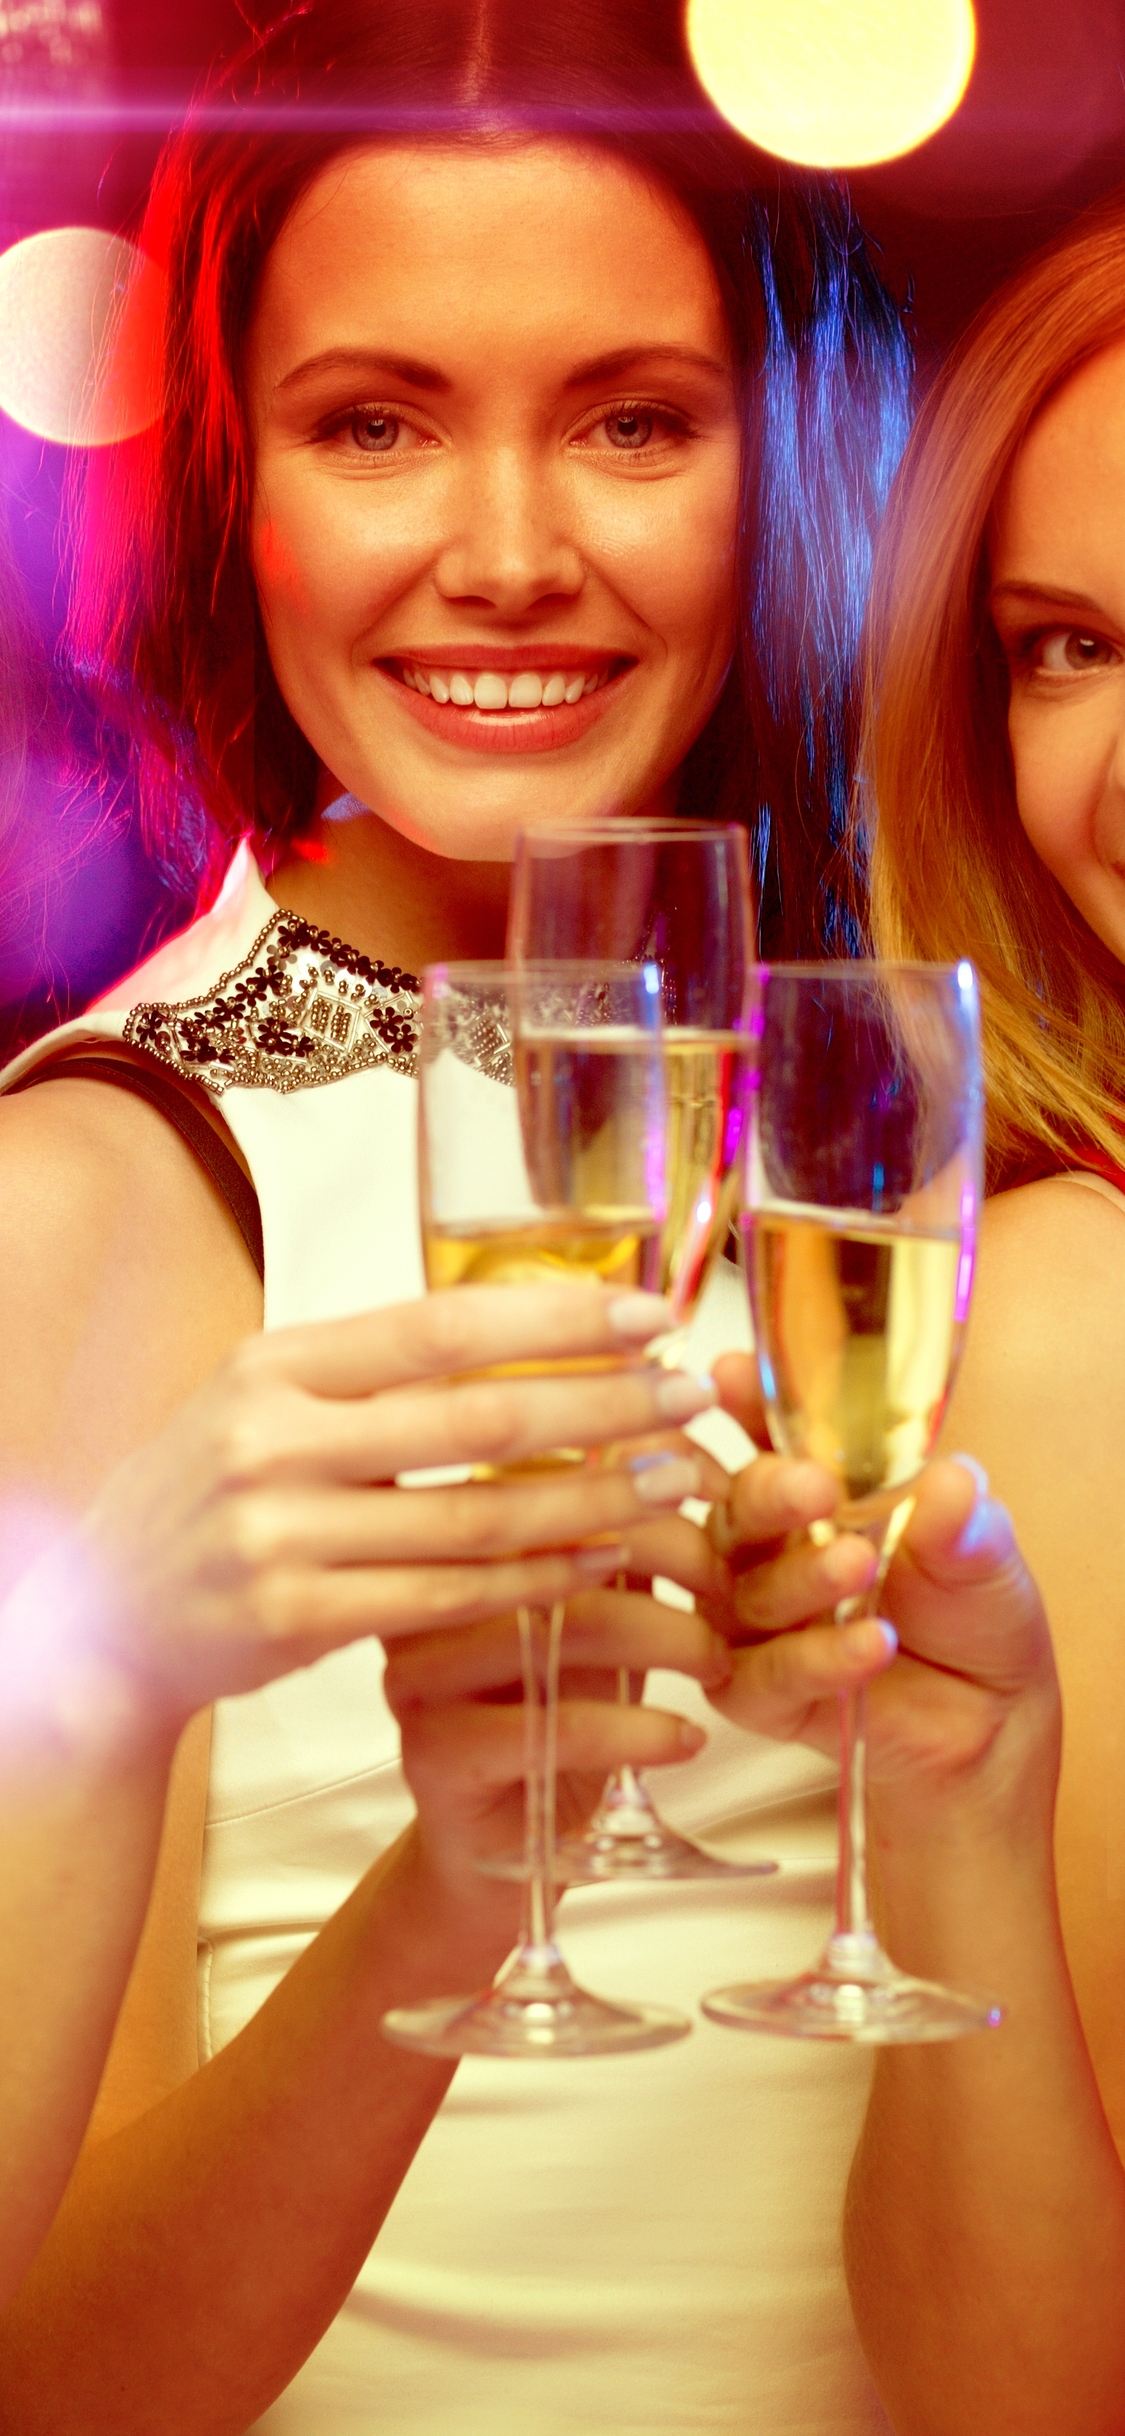 Image: Holiday, girls, champagne, fun, photos